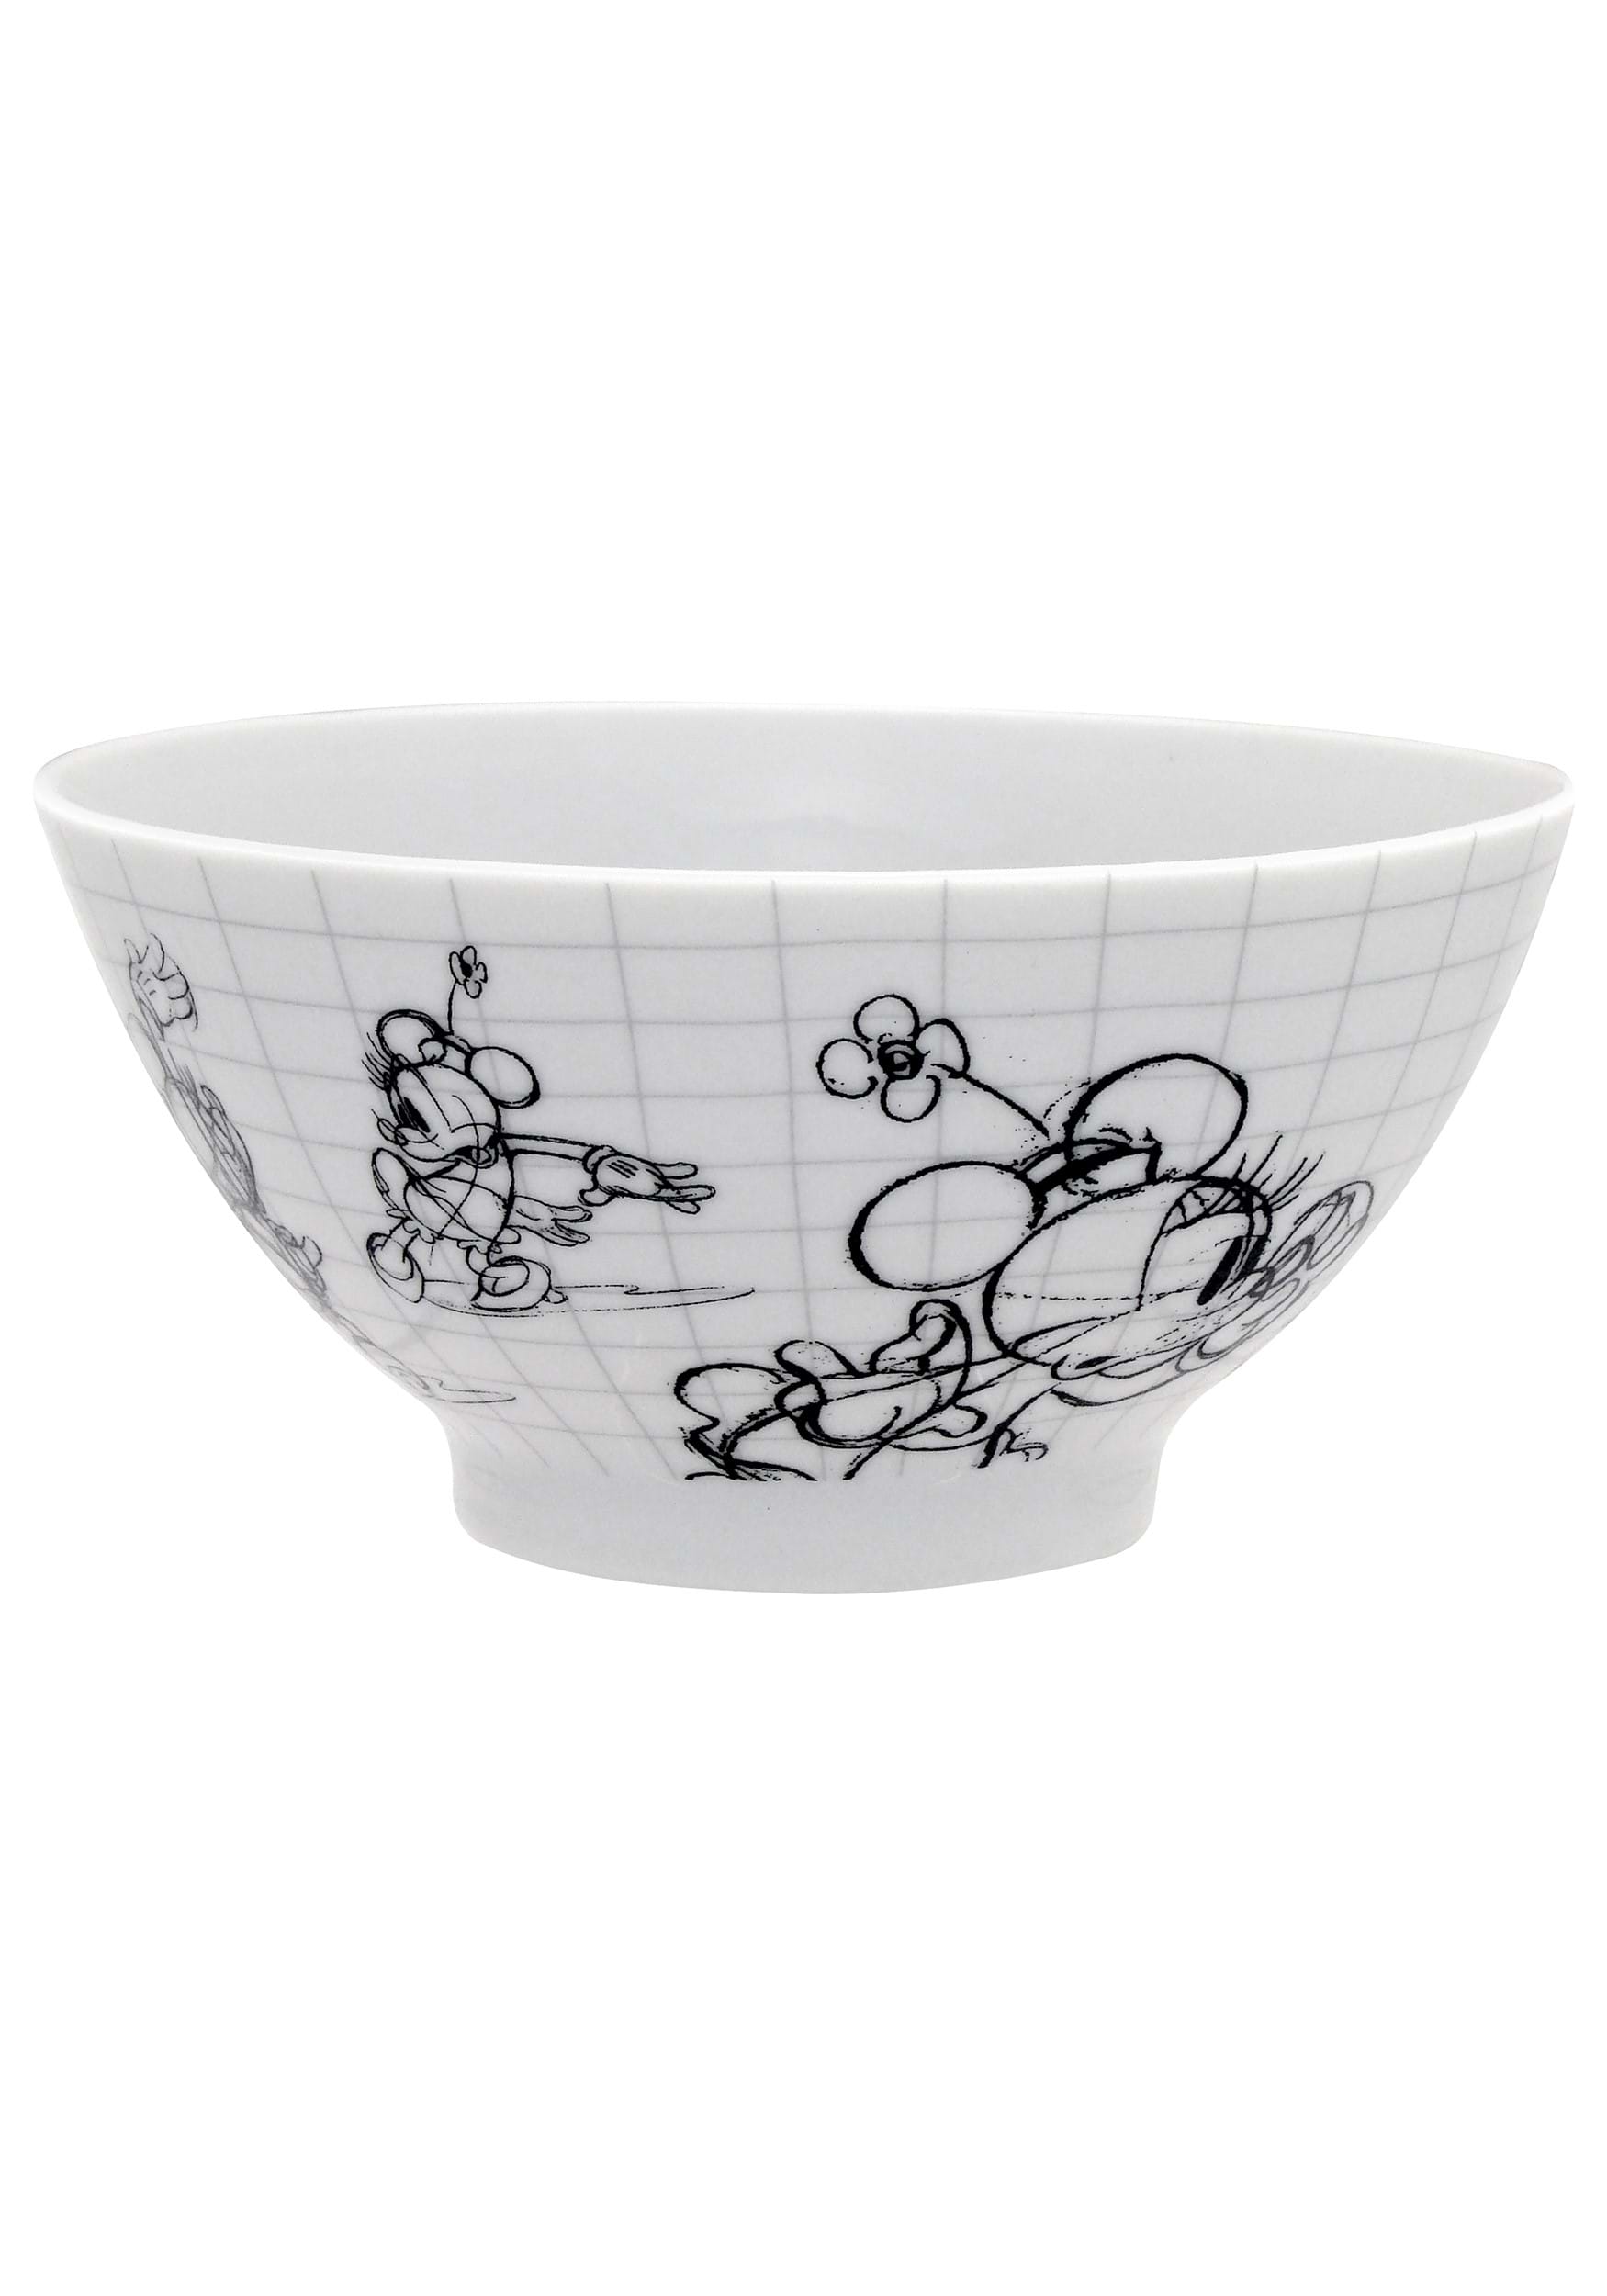 Disney Sketchbook Minnie Mouse Soup/Cereal Bowl